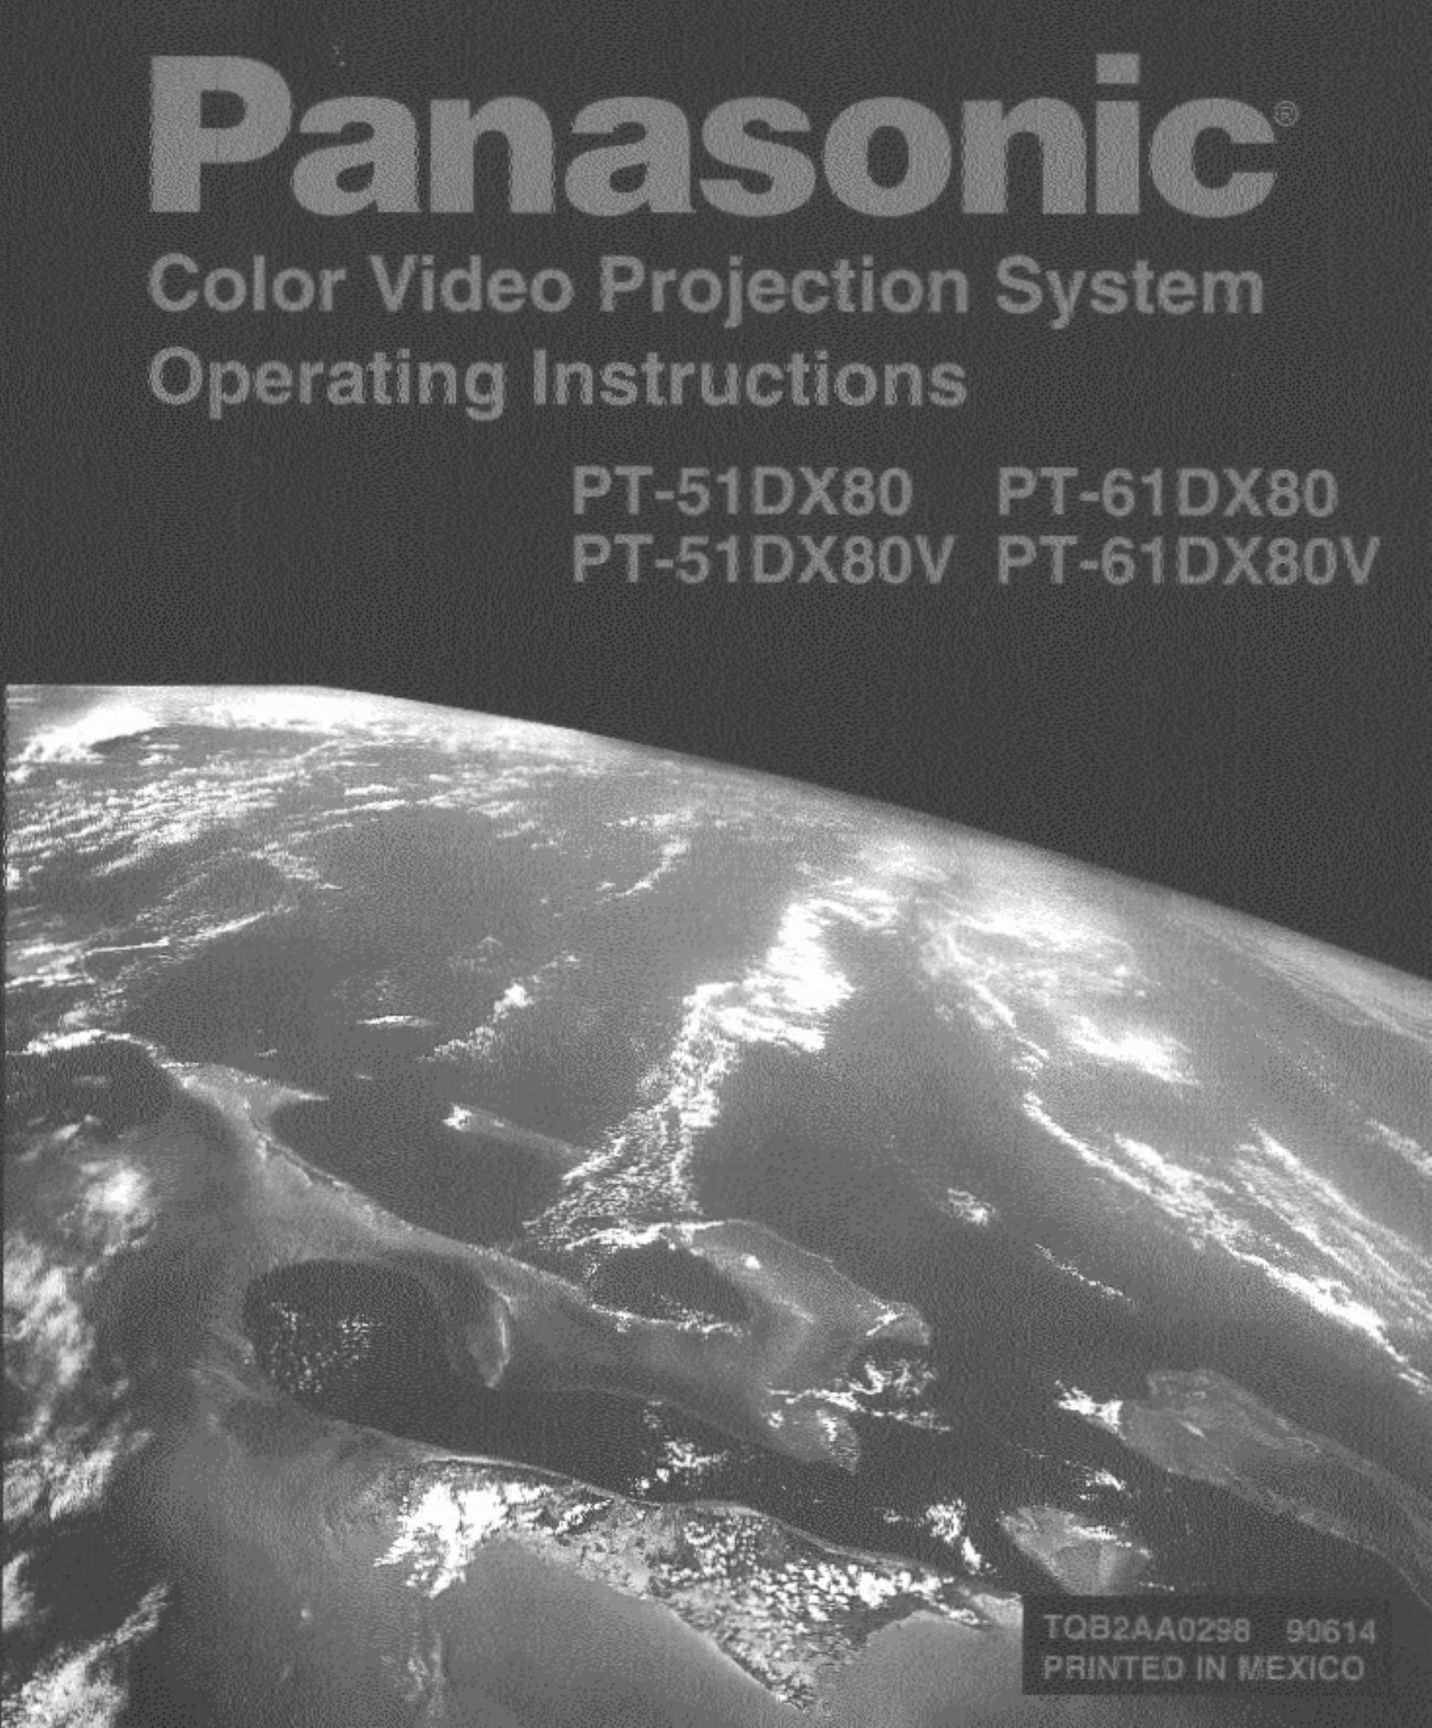 Panasonic PT-61DX80V Projector User Manual